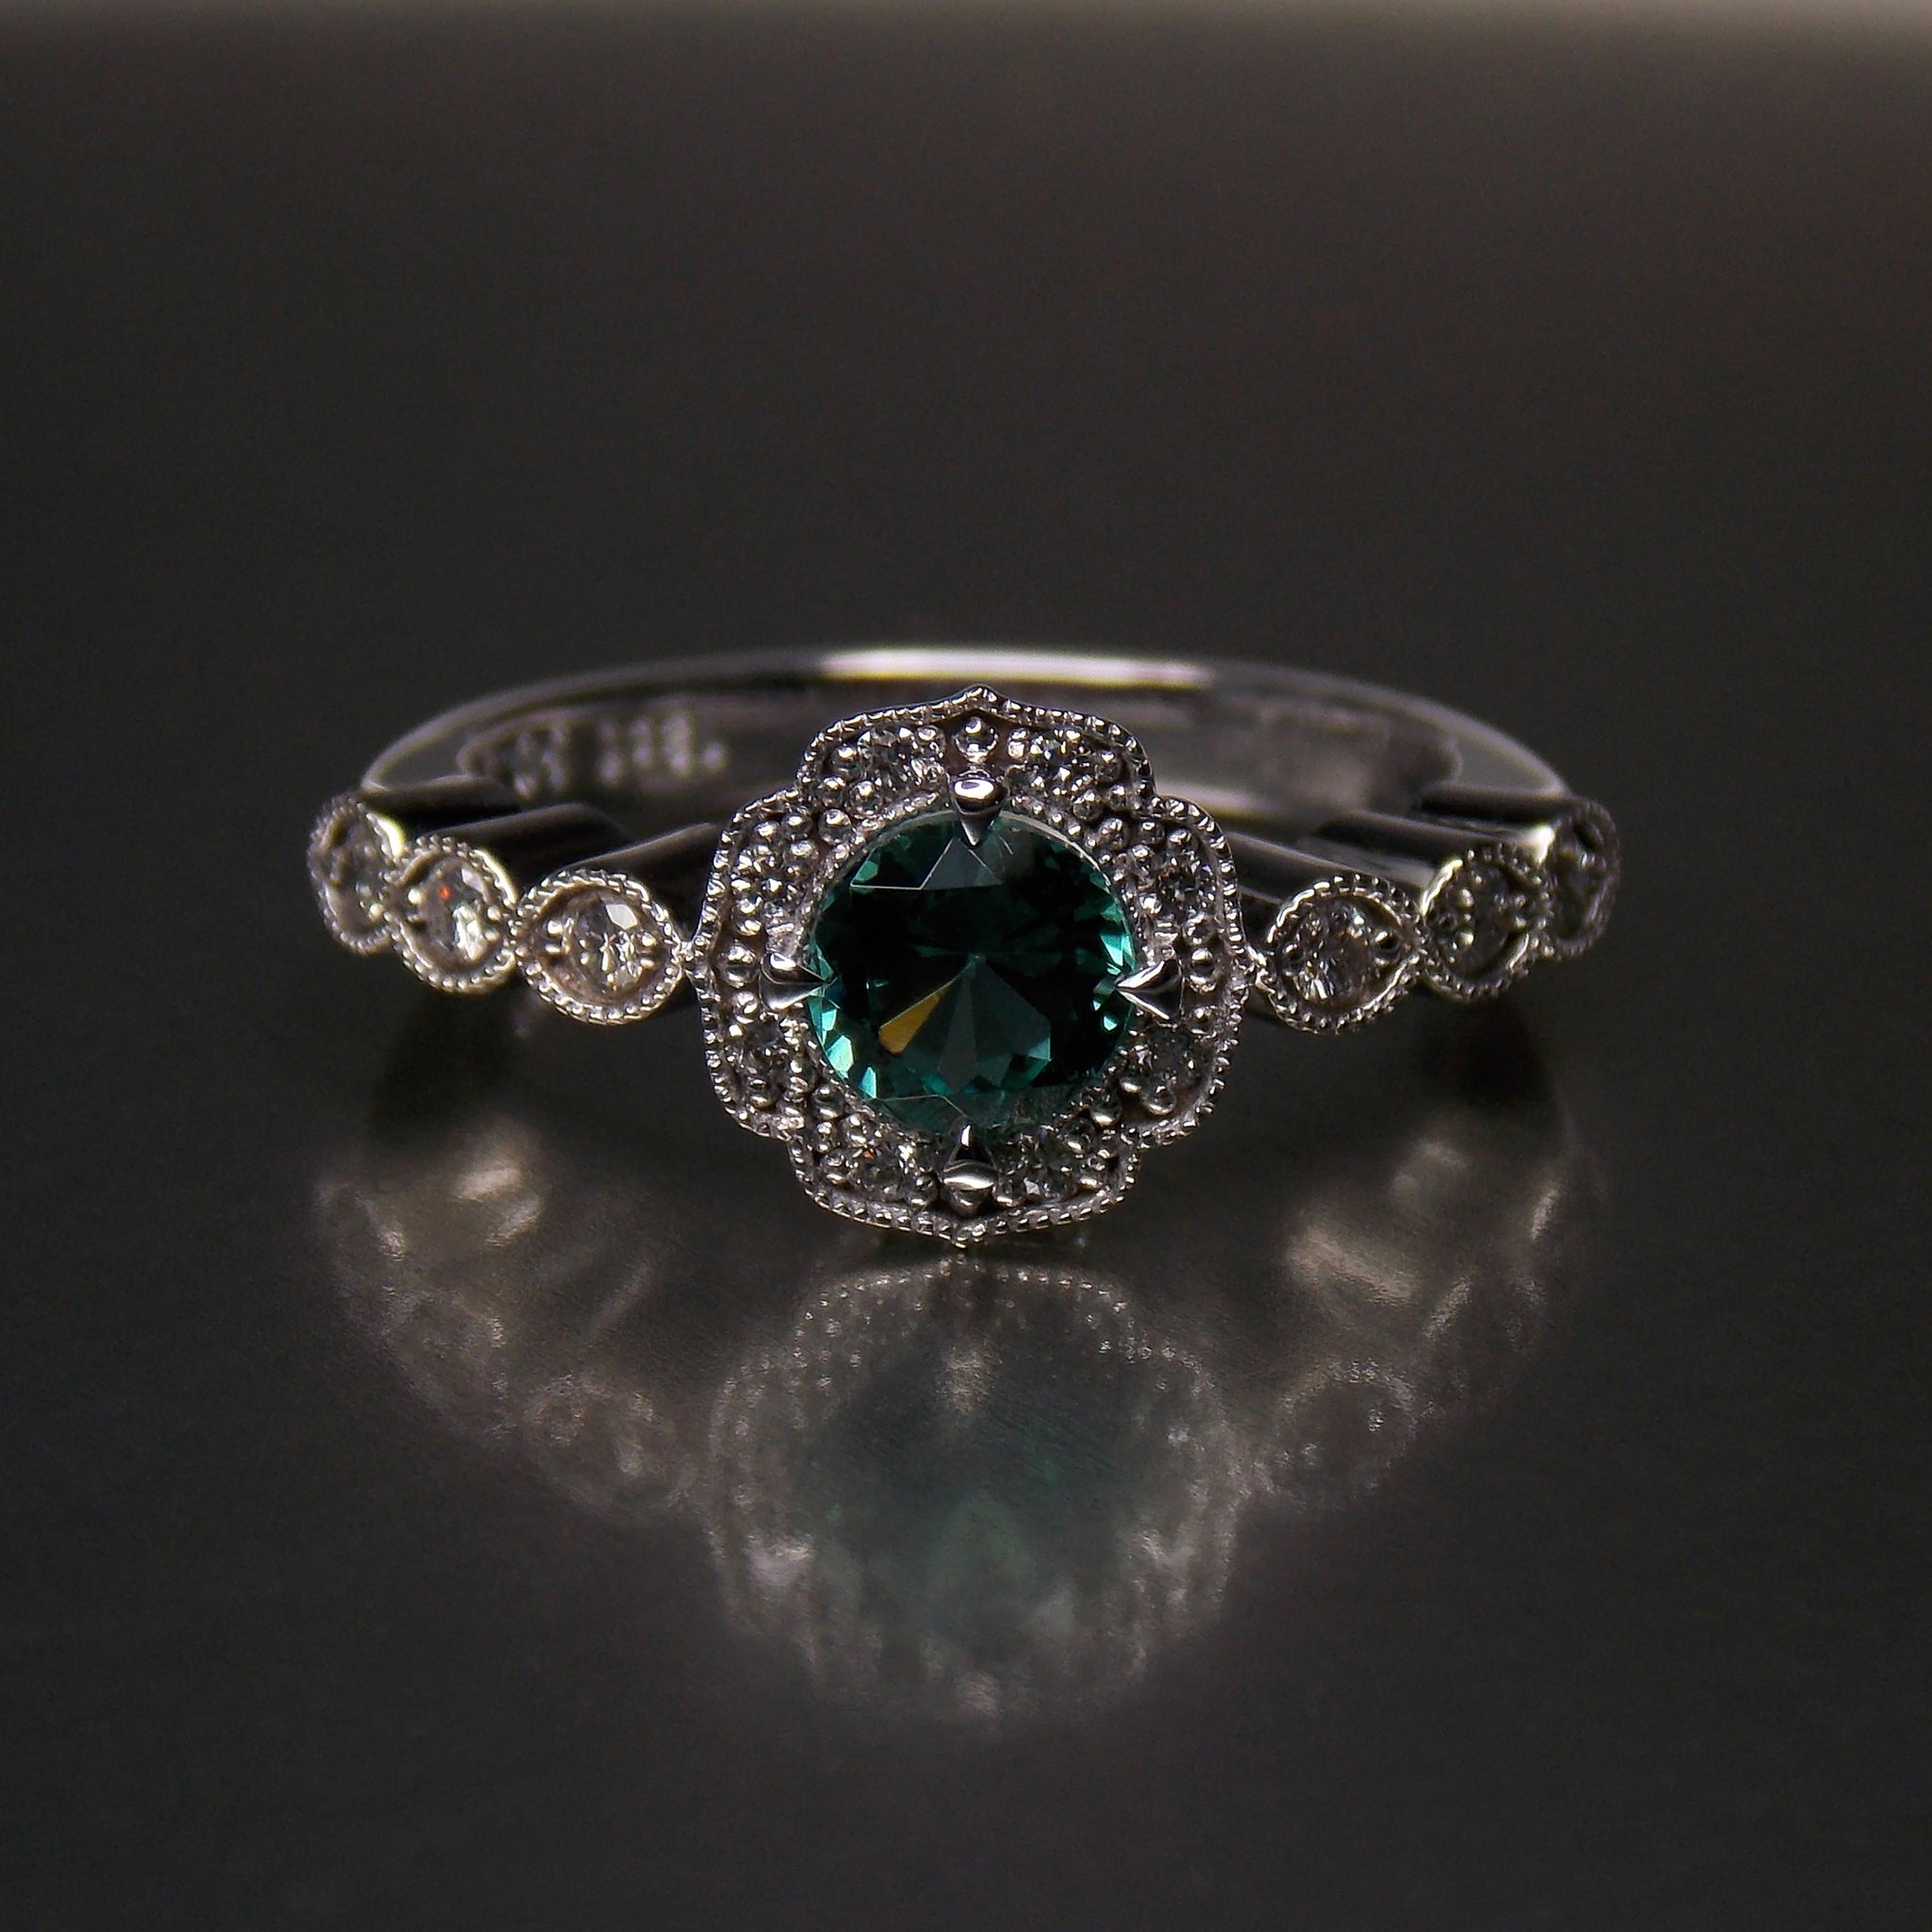 Vintage 18K white gold engagement ring set with green tourmaline & diamonds